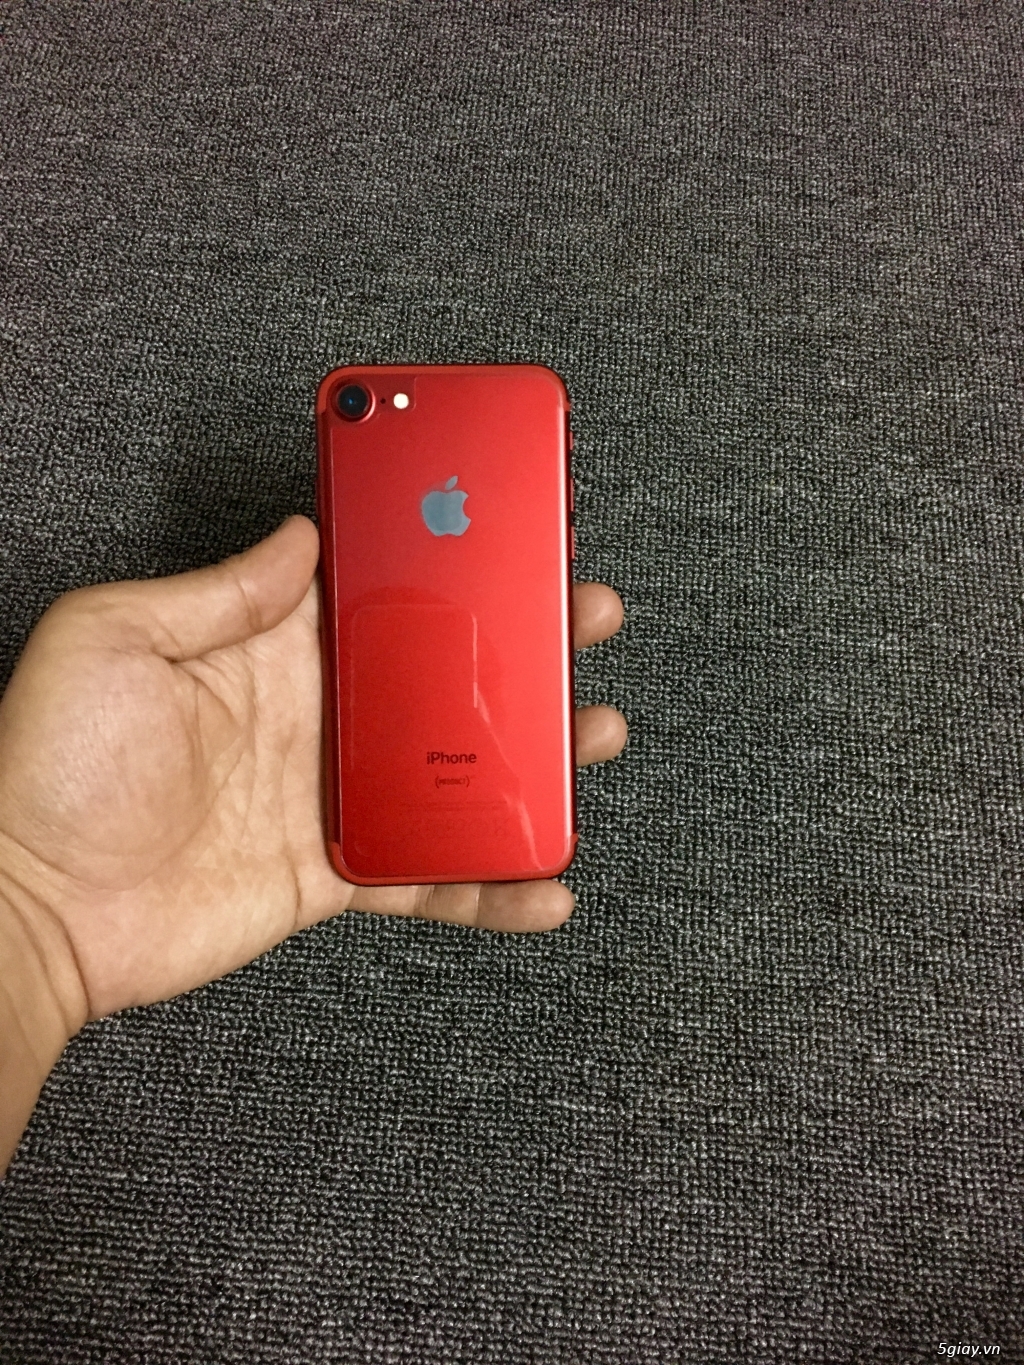 Iphone 7 128GB Red ( Đỏ) Quốc Tế Mới 99,99% Likenew Singapore - 1